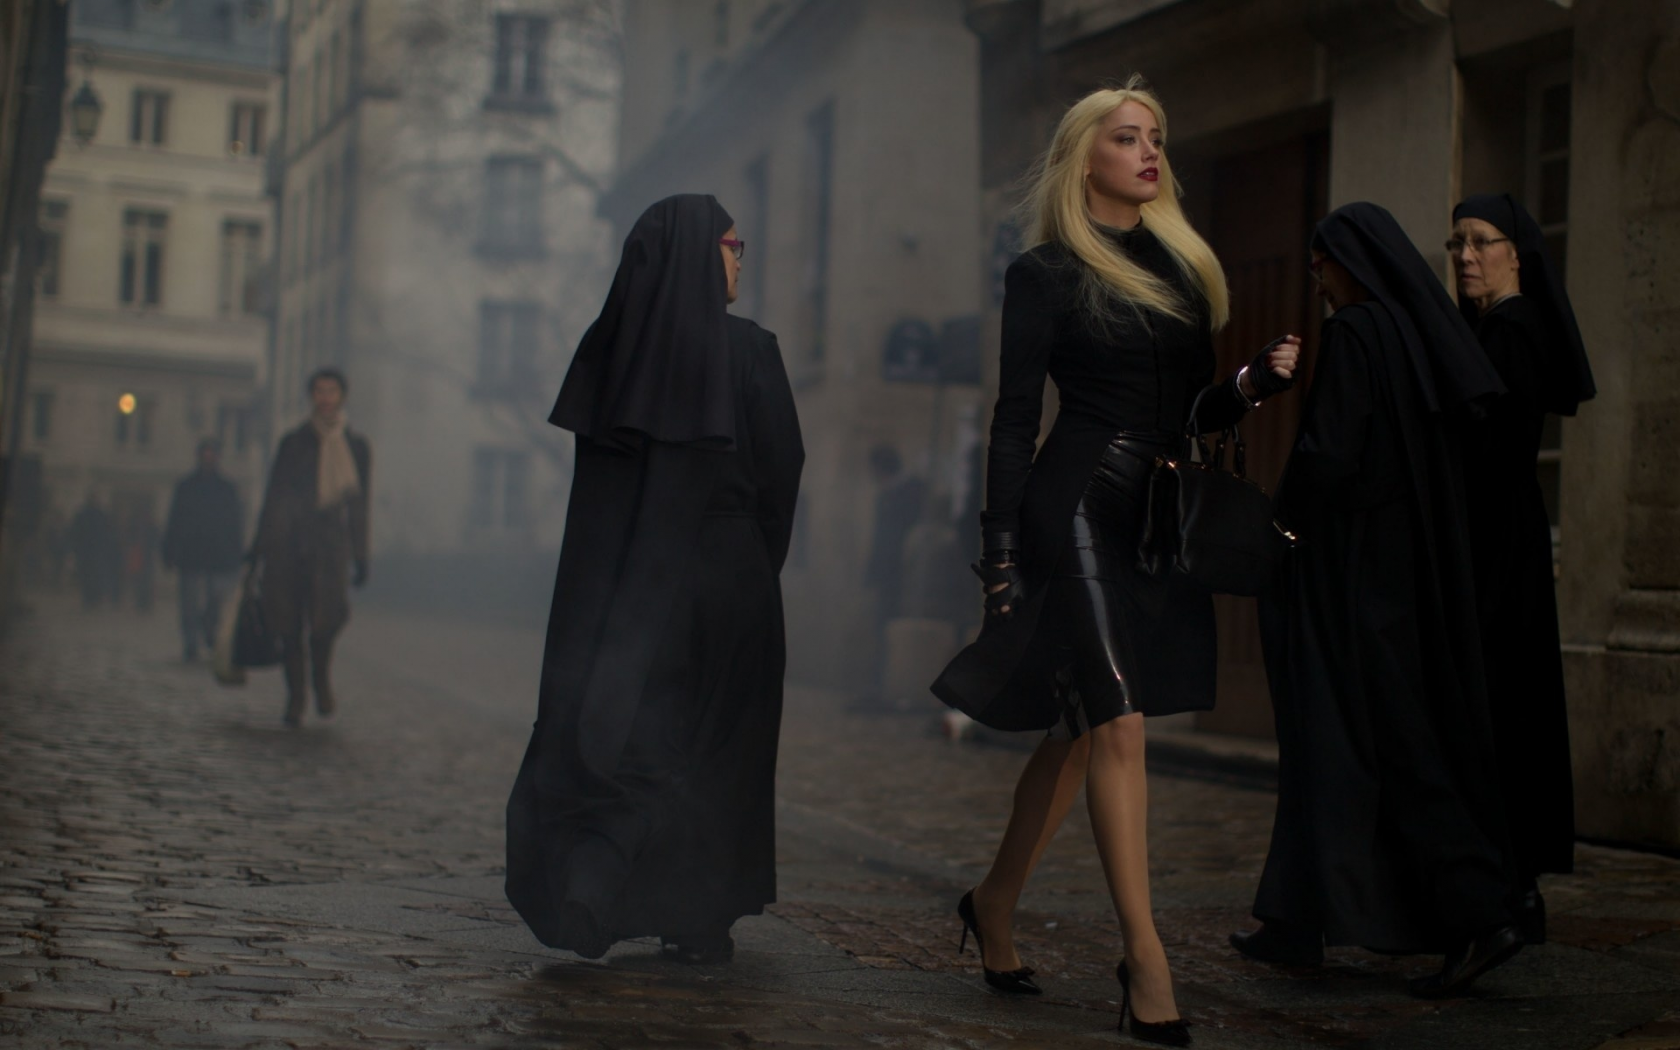 улица, монашки, девушка, красотка, блондинка, город, религия, мода, красота, юбка, сутана, черное